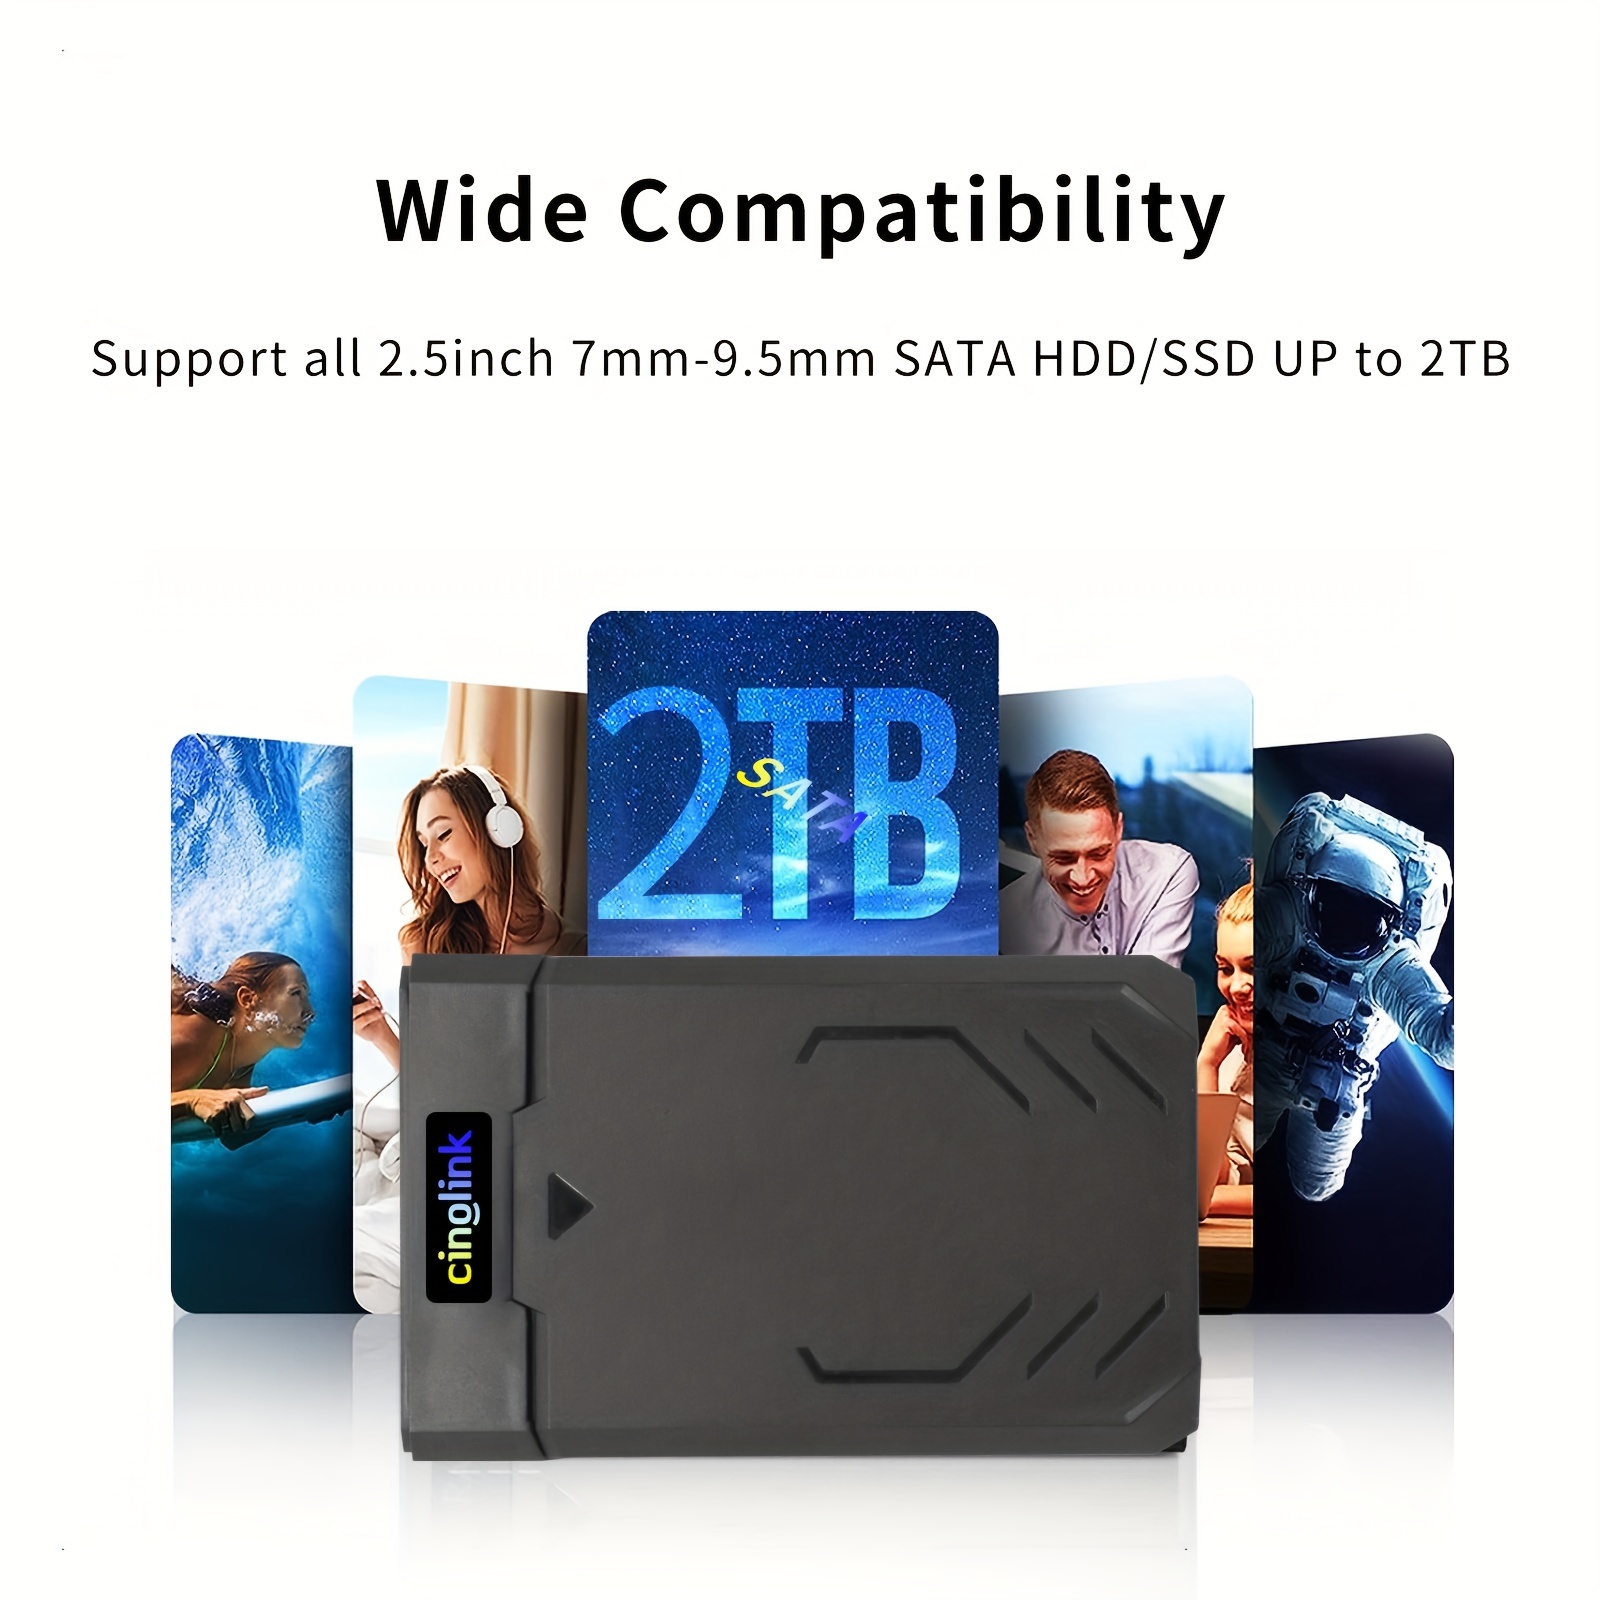 USB 3.0 to SSD SATA HDD Enclosure,Hard Drive Enclosure USB 3.0 to SATA III  for 2.5 Inch SSD & HDD 9.5mm 7mm External Hard Drive Enclosure,Tool Free Ex